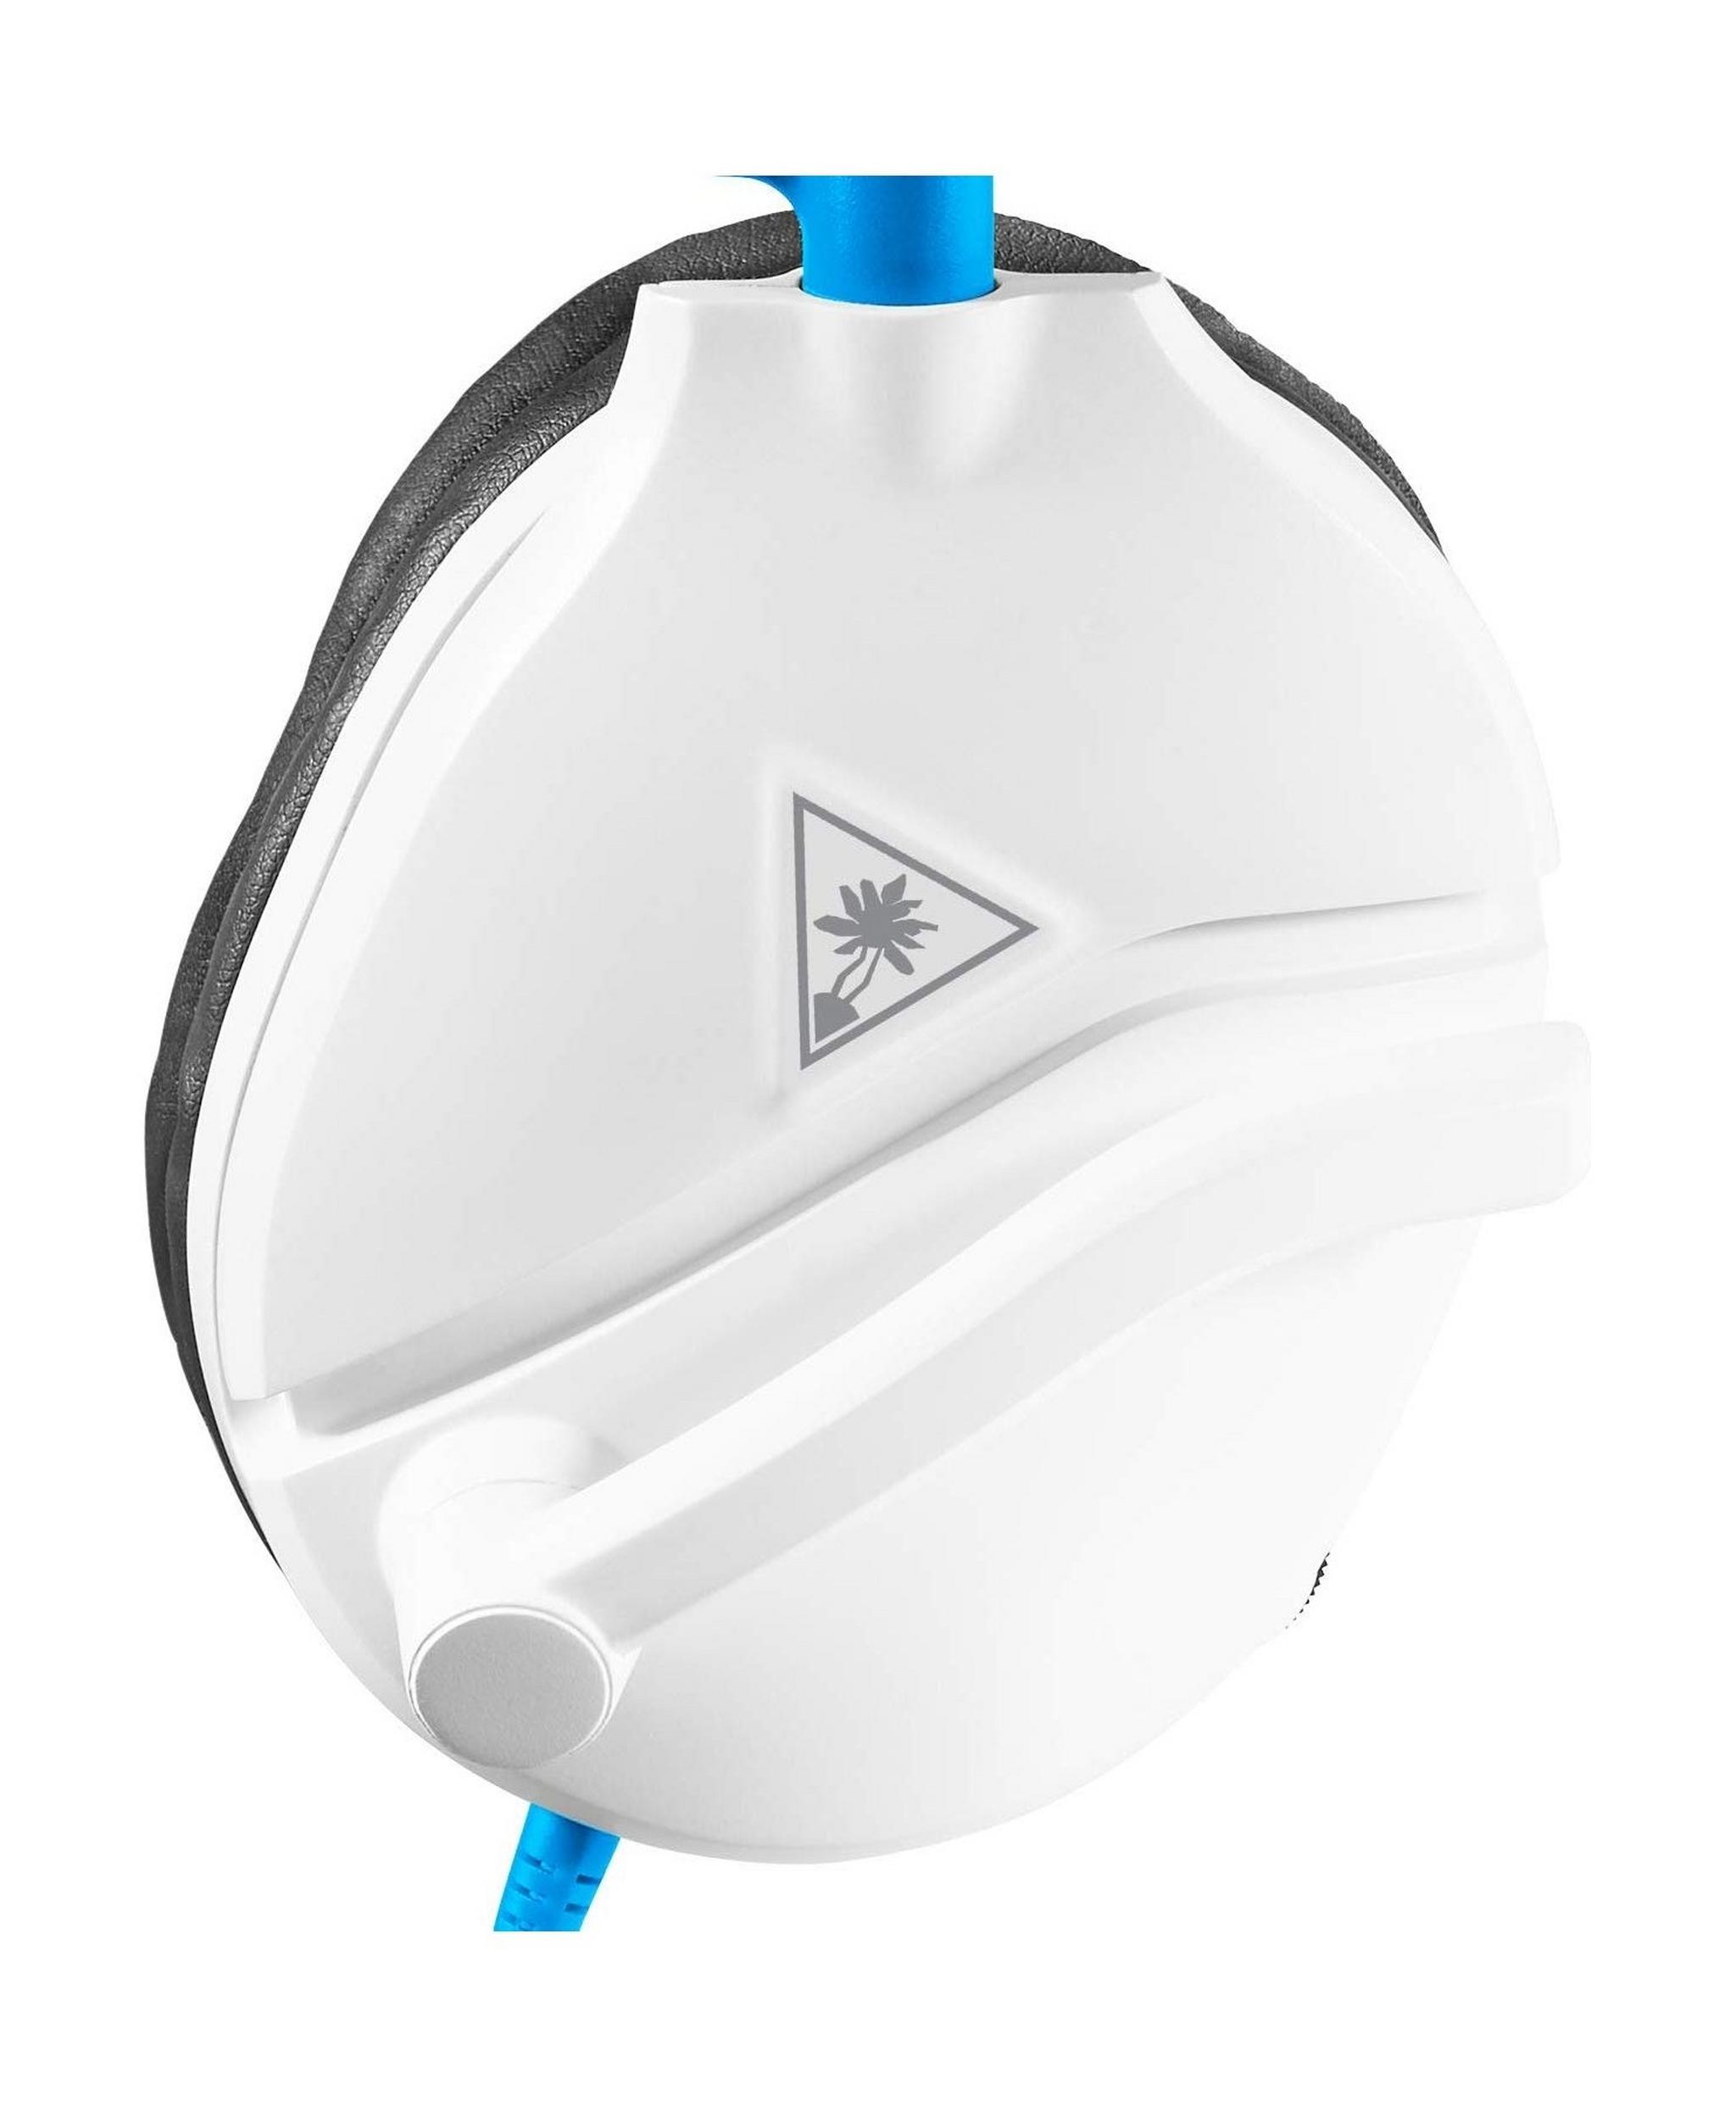 Turtlebeach Recon 70 Gaming Headset - White